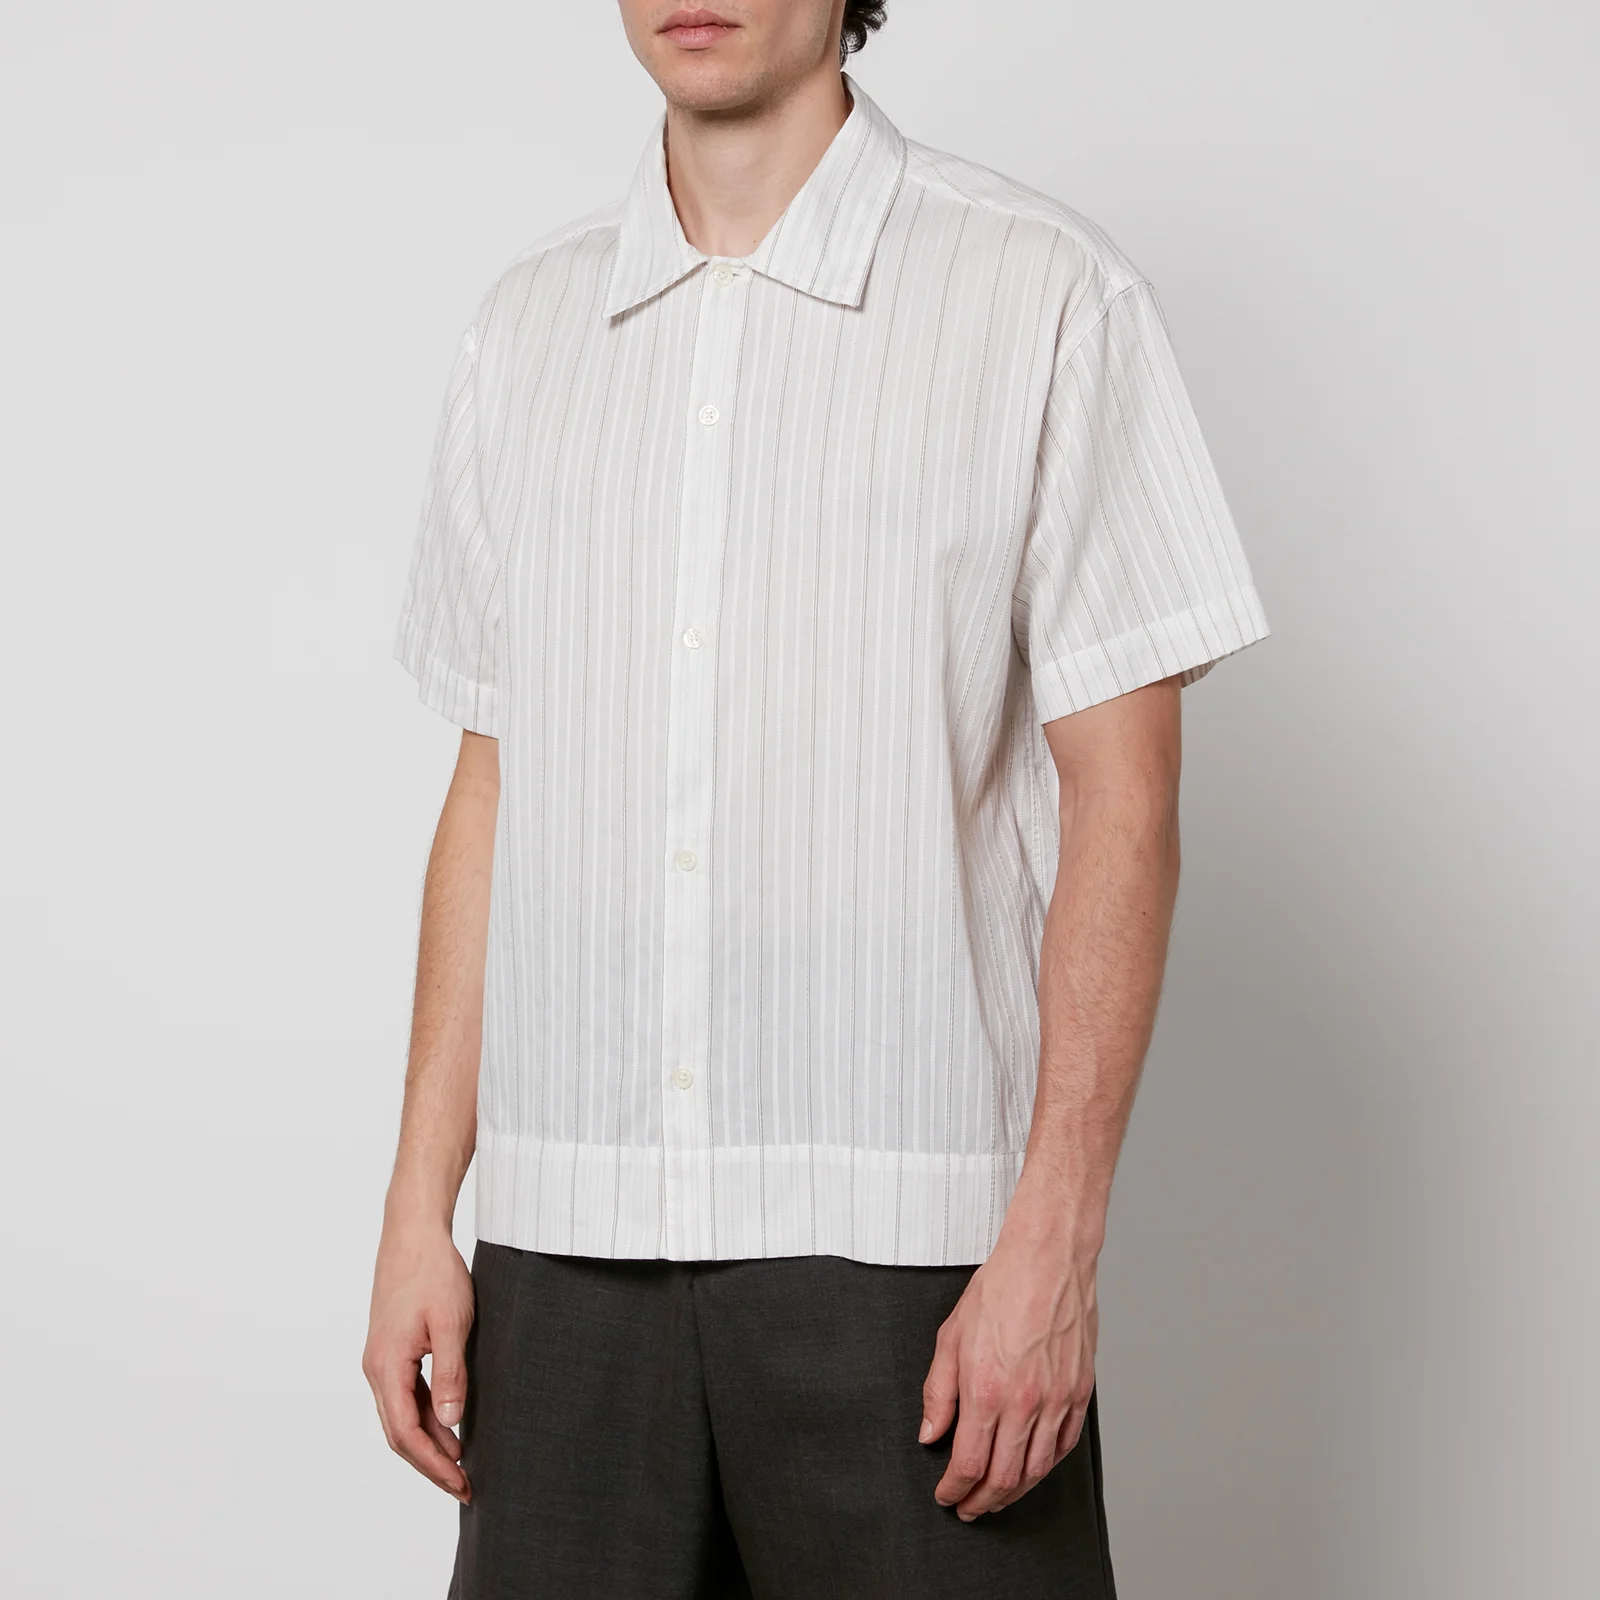 mfpen Holiday Striped Cotton Shirt Image 1